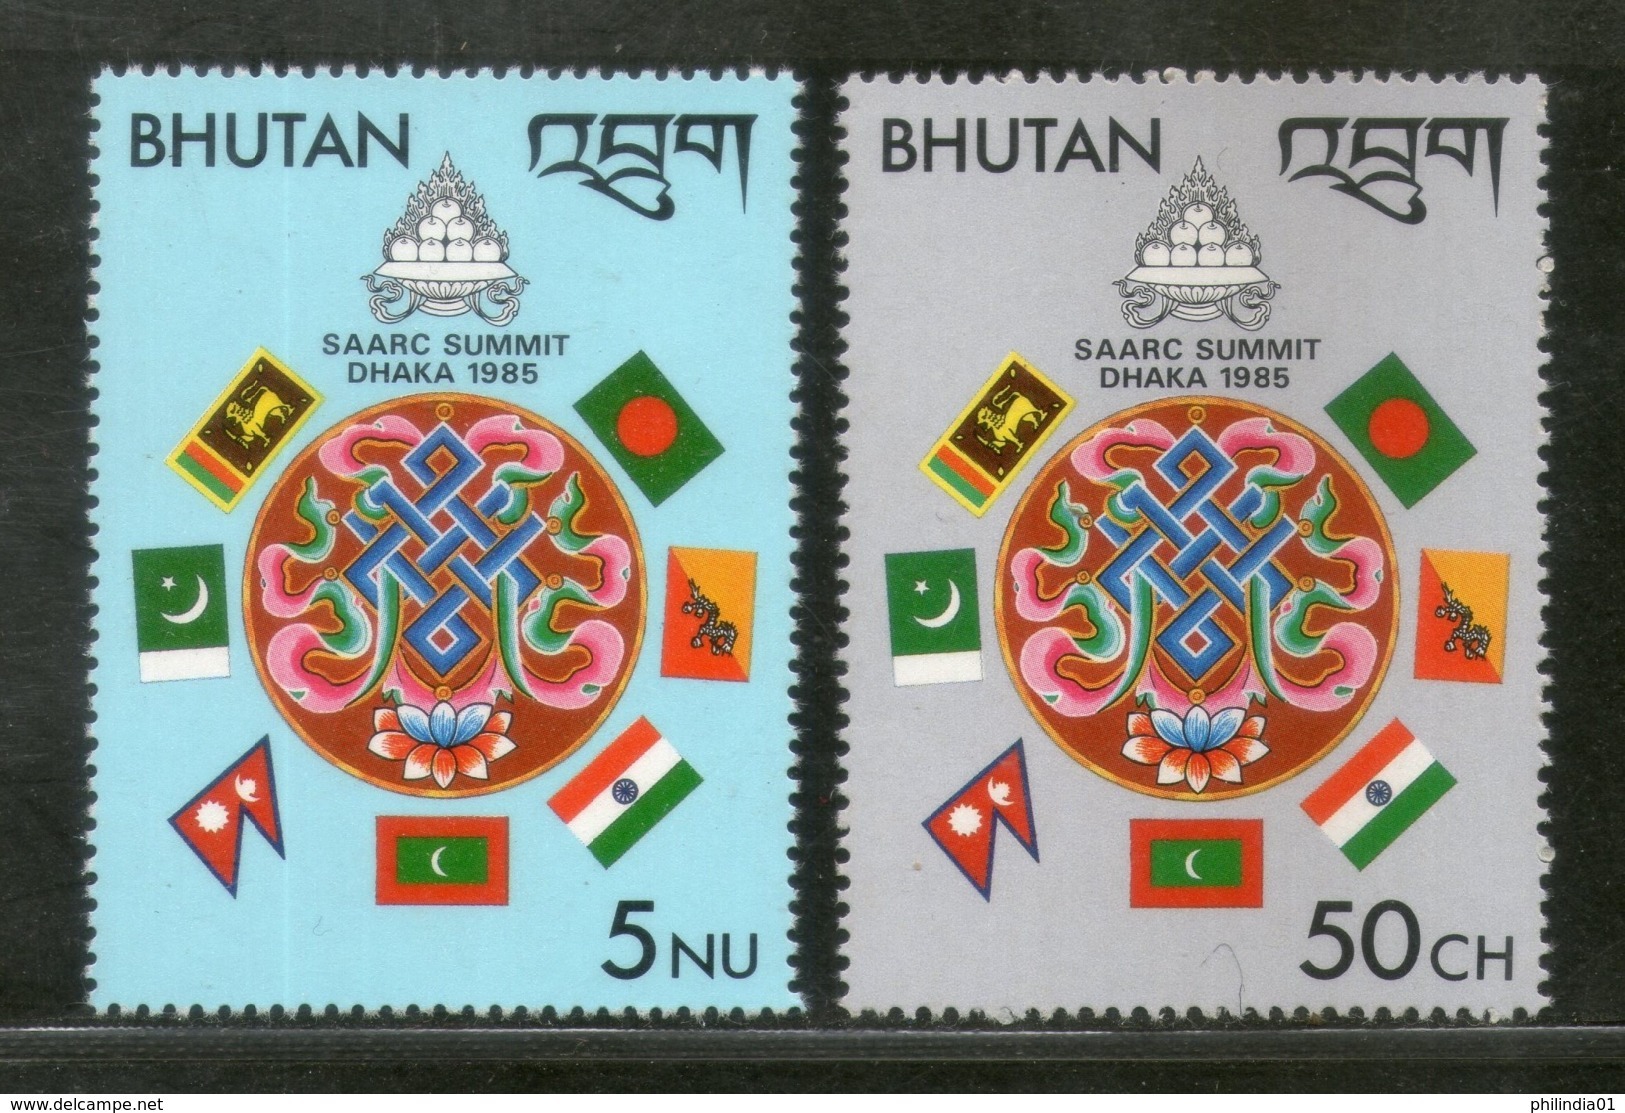 Bhutan 1985 SAARC Summit Flags Sc 528-29 MNH # 119 - Bhutan